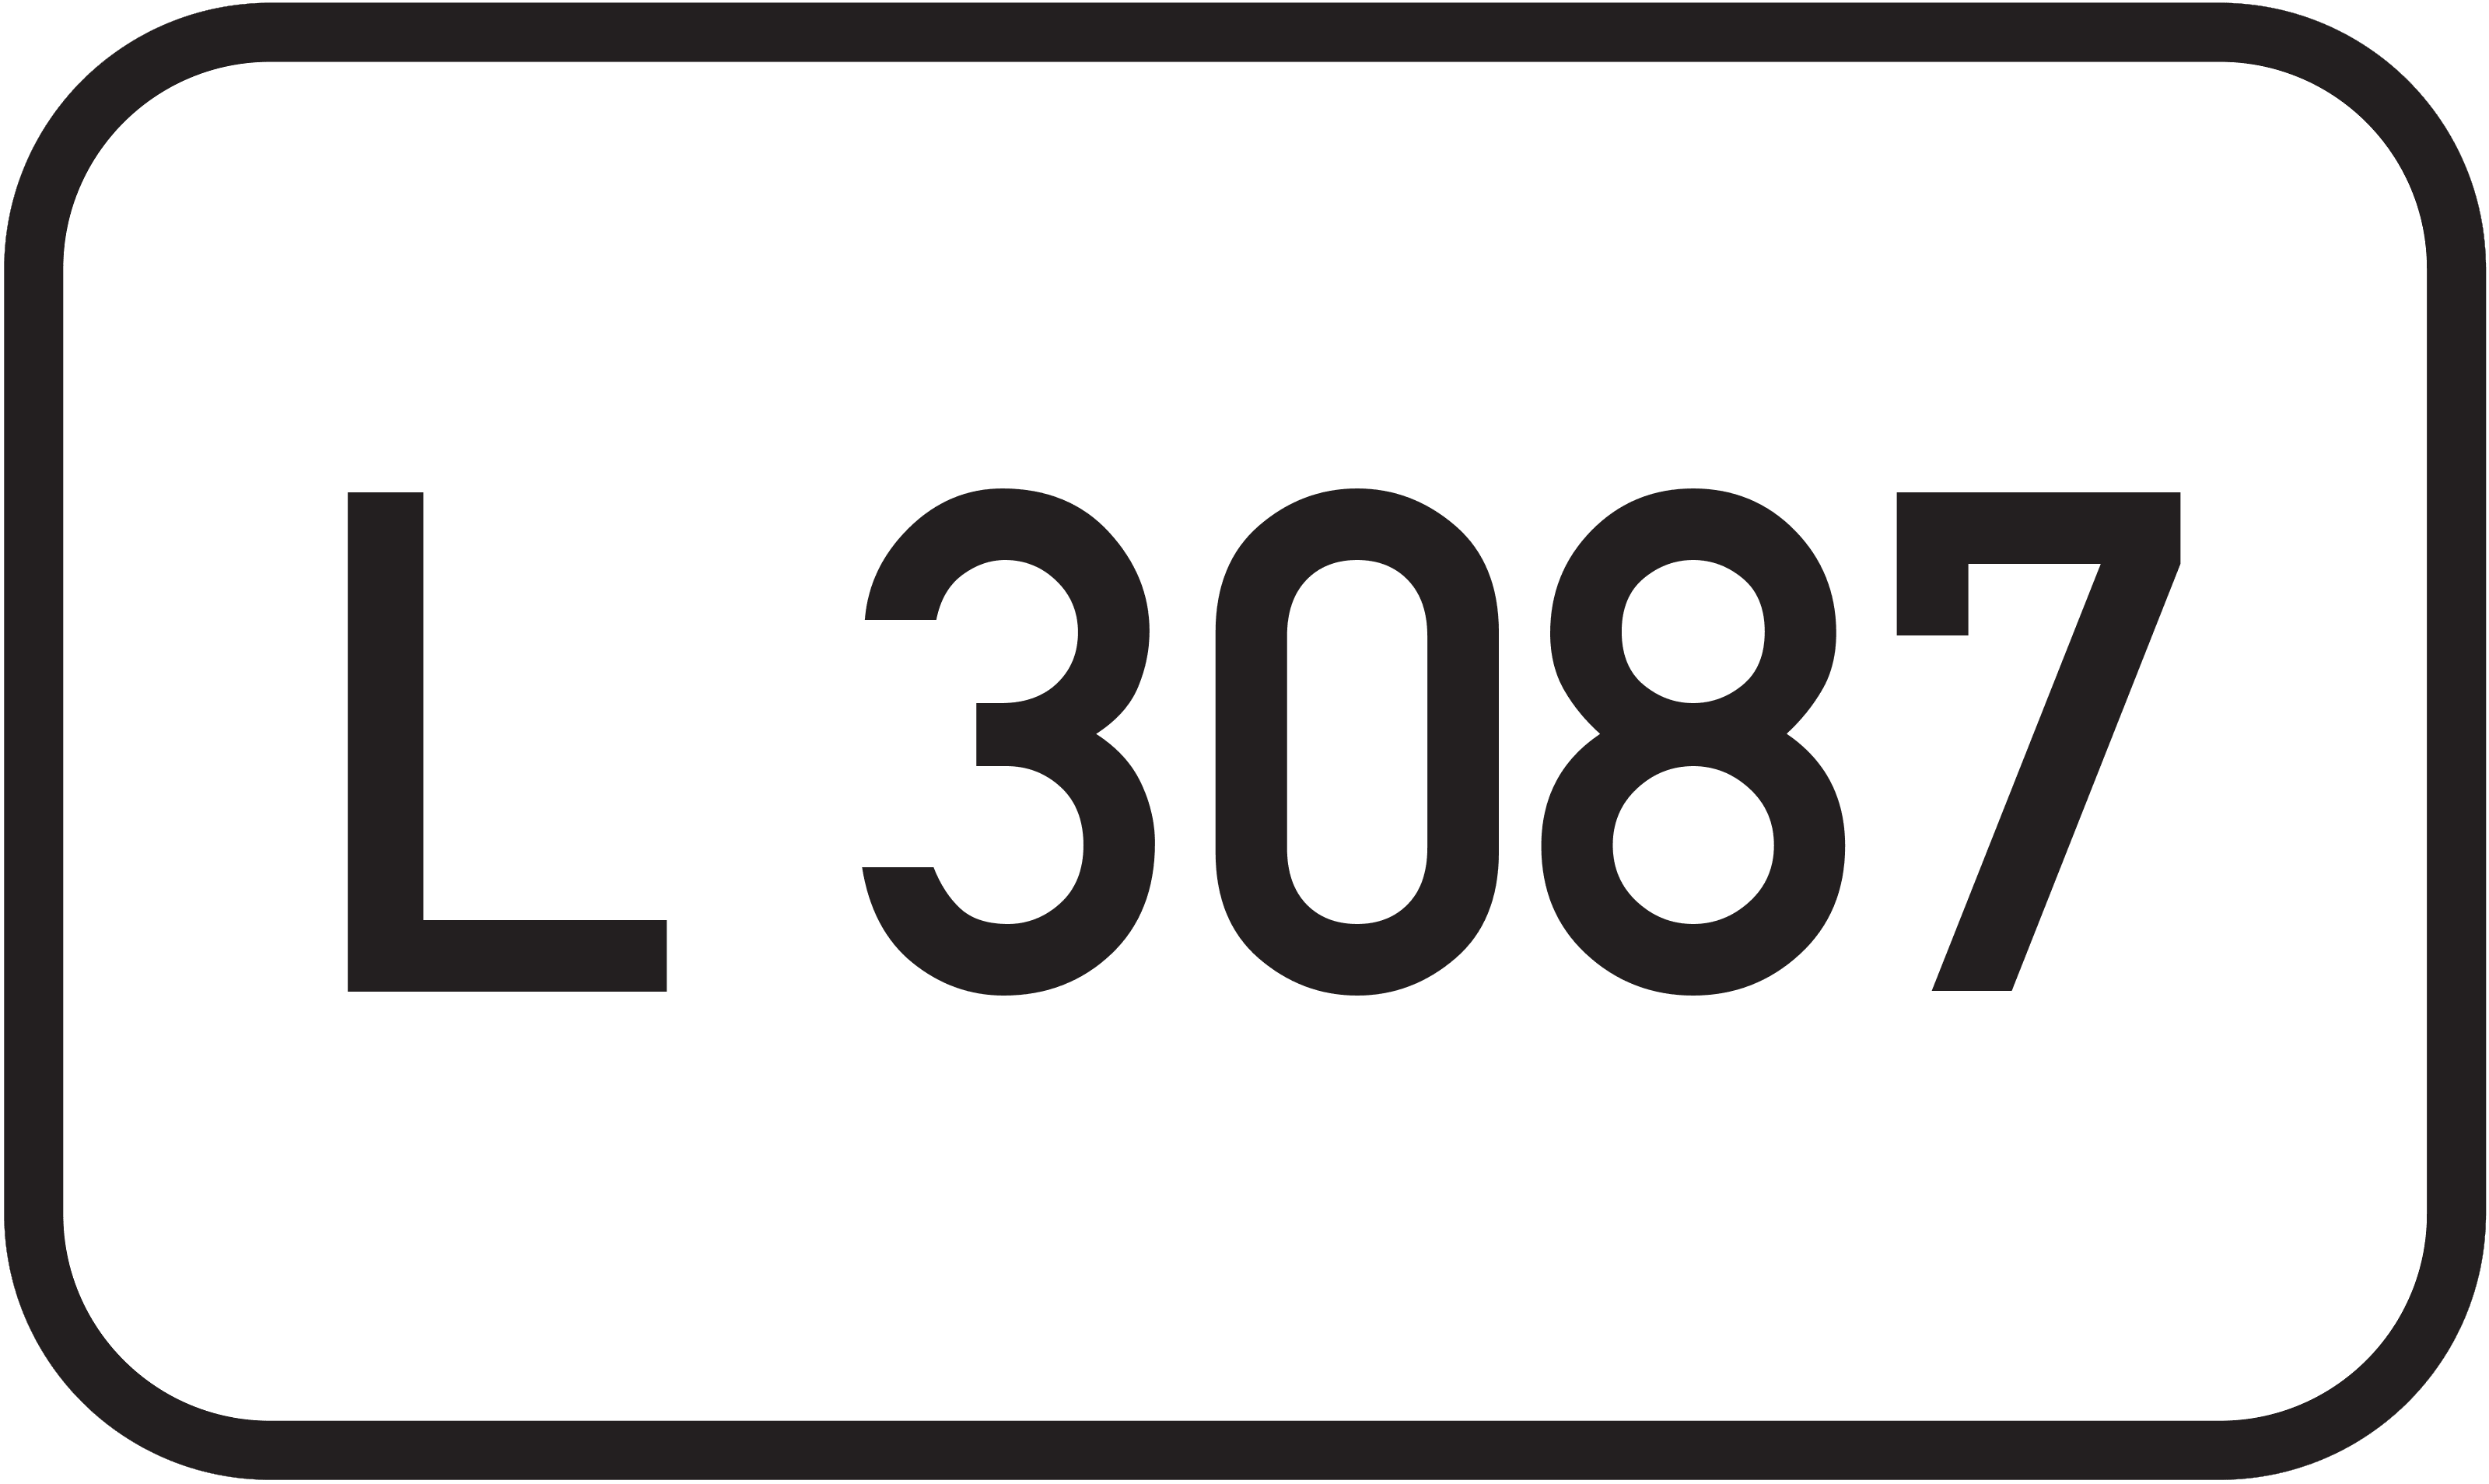 Straßenschild Landesstraße L 3087